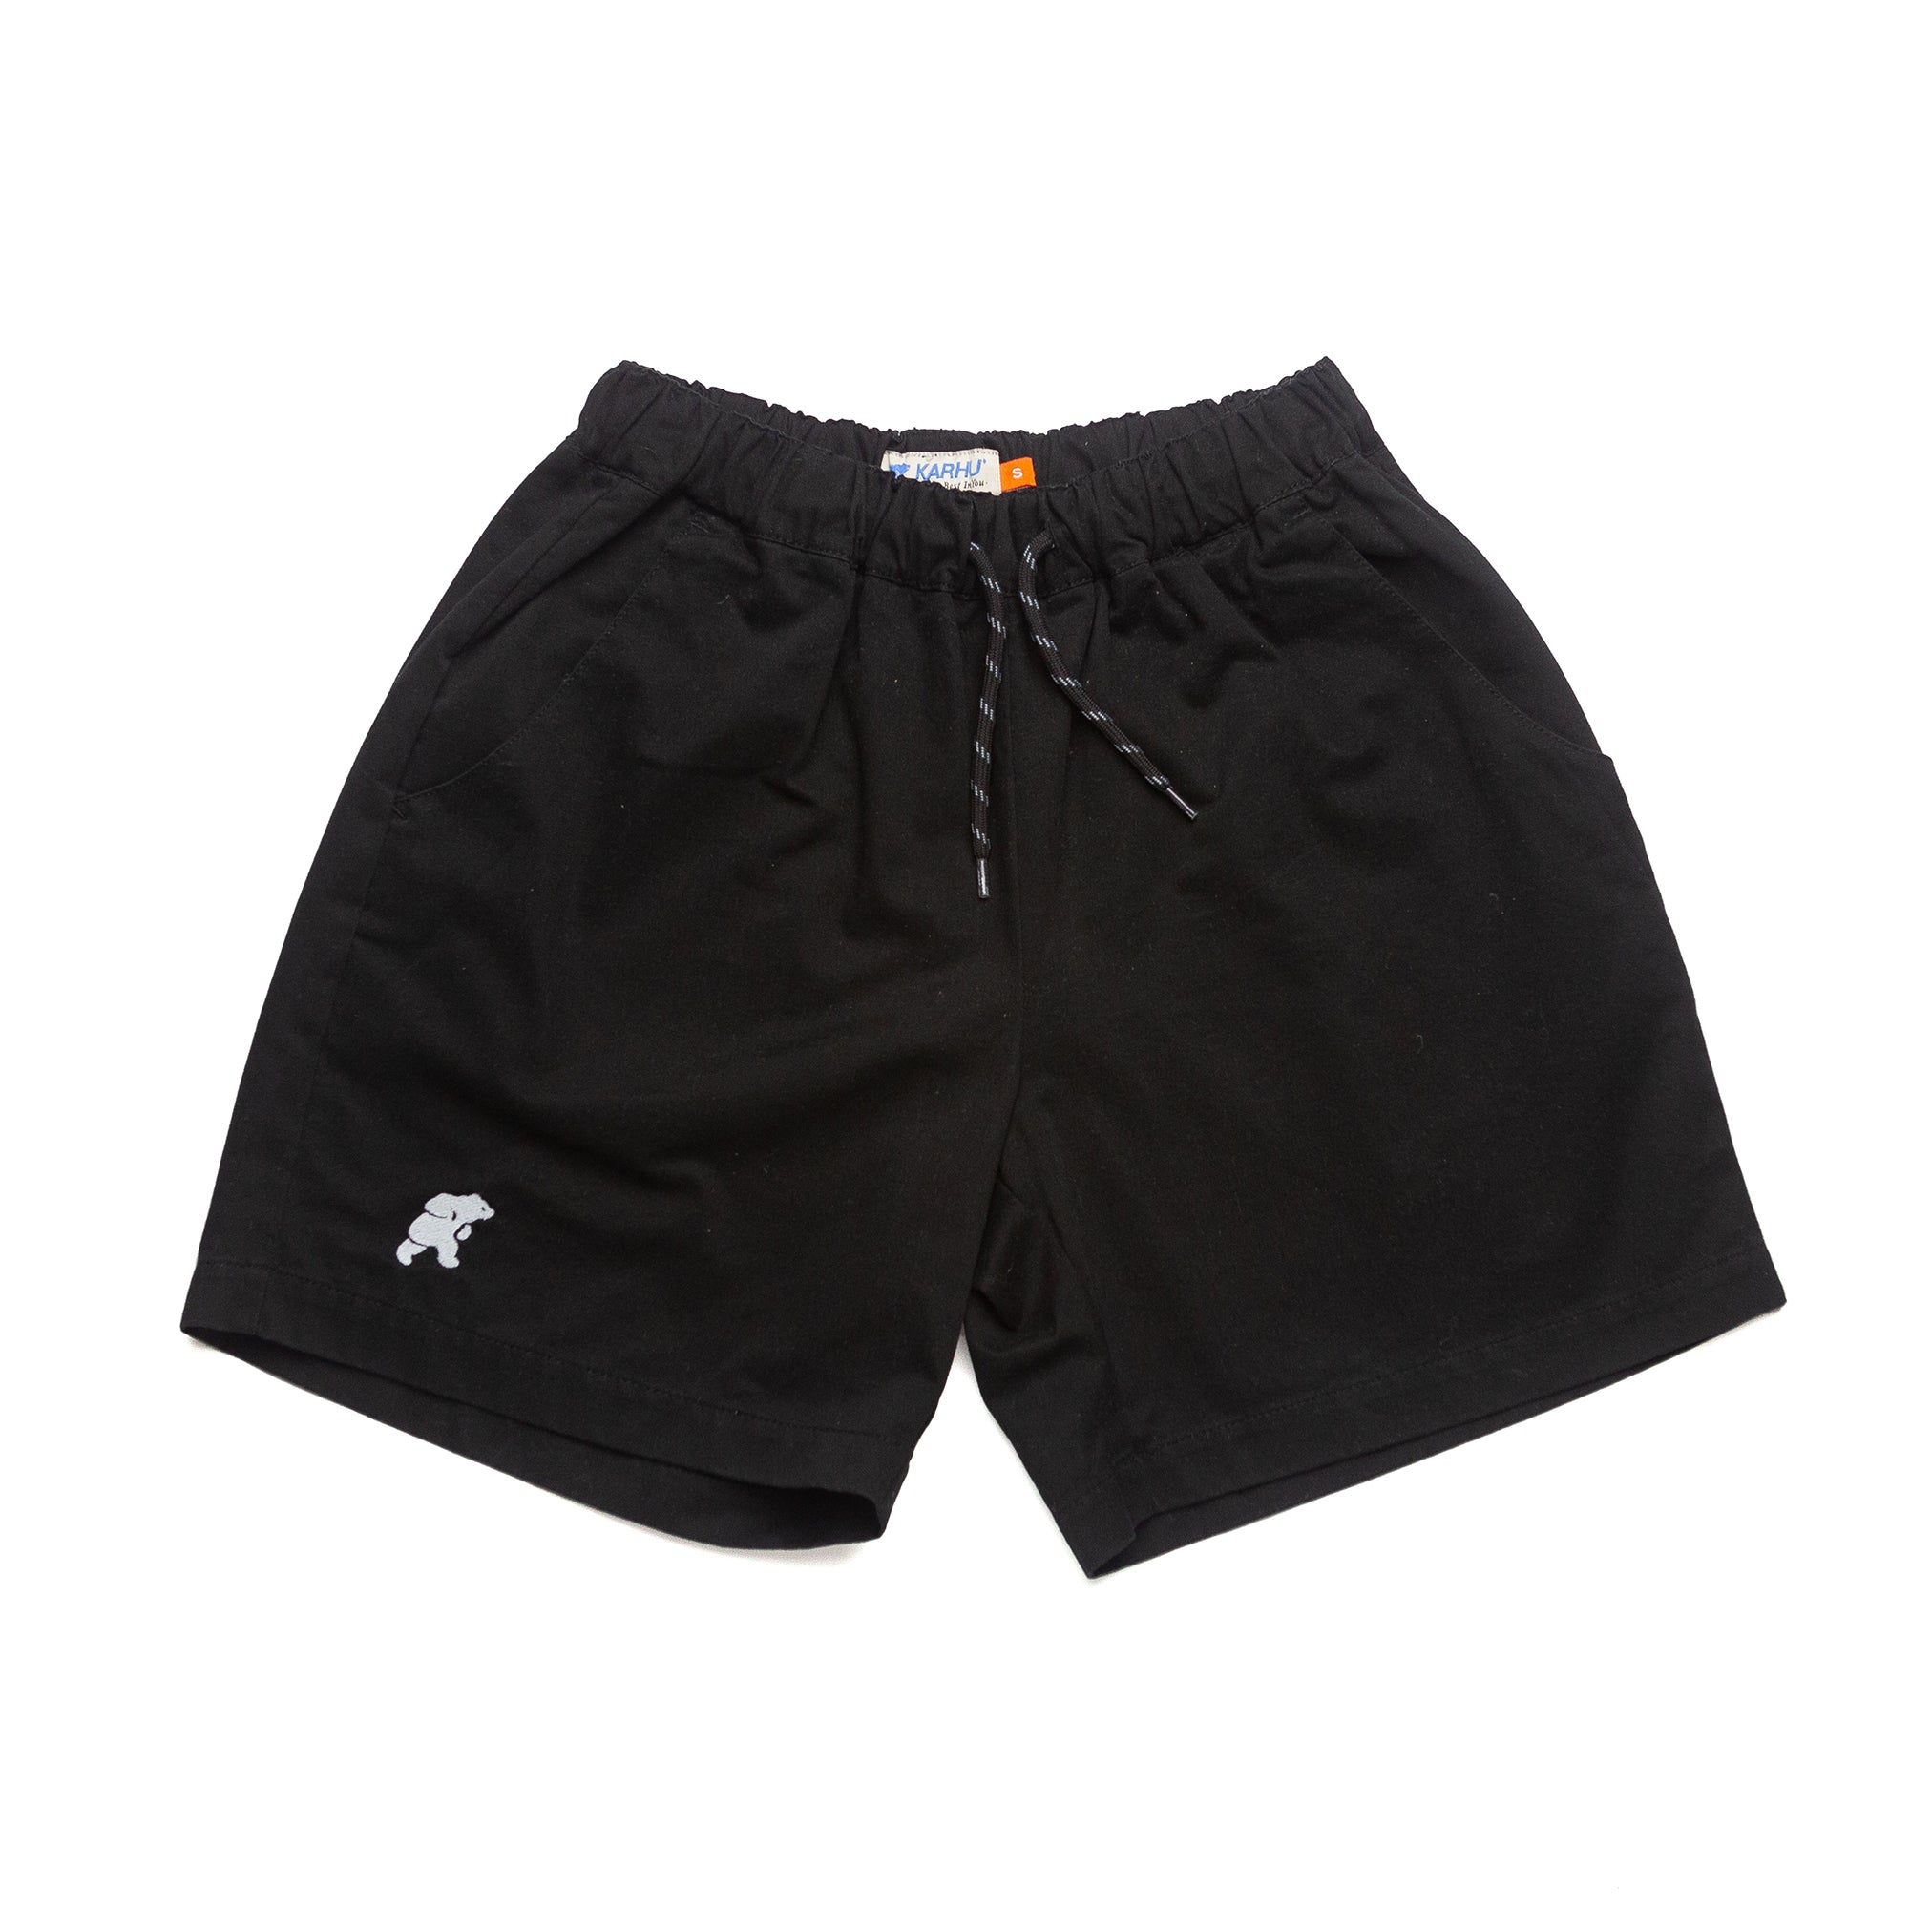 Trampas Shorts in Black Foggy Dew - S